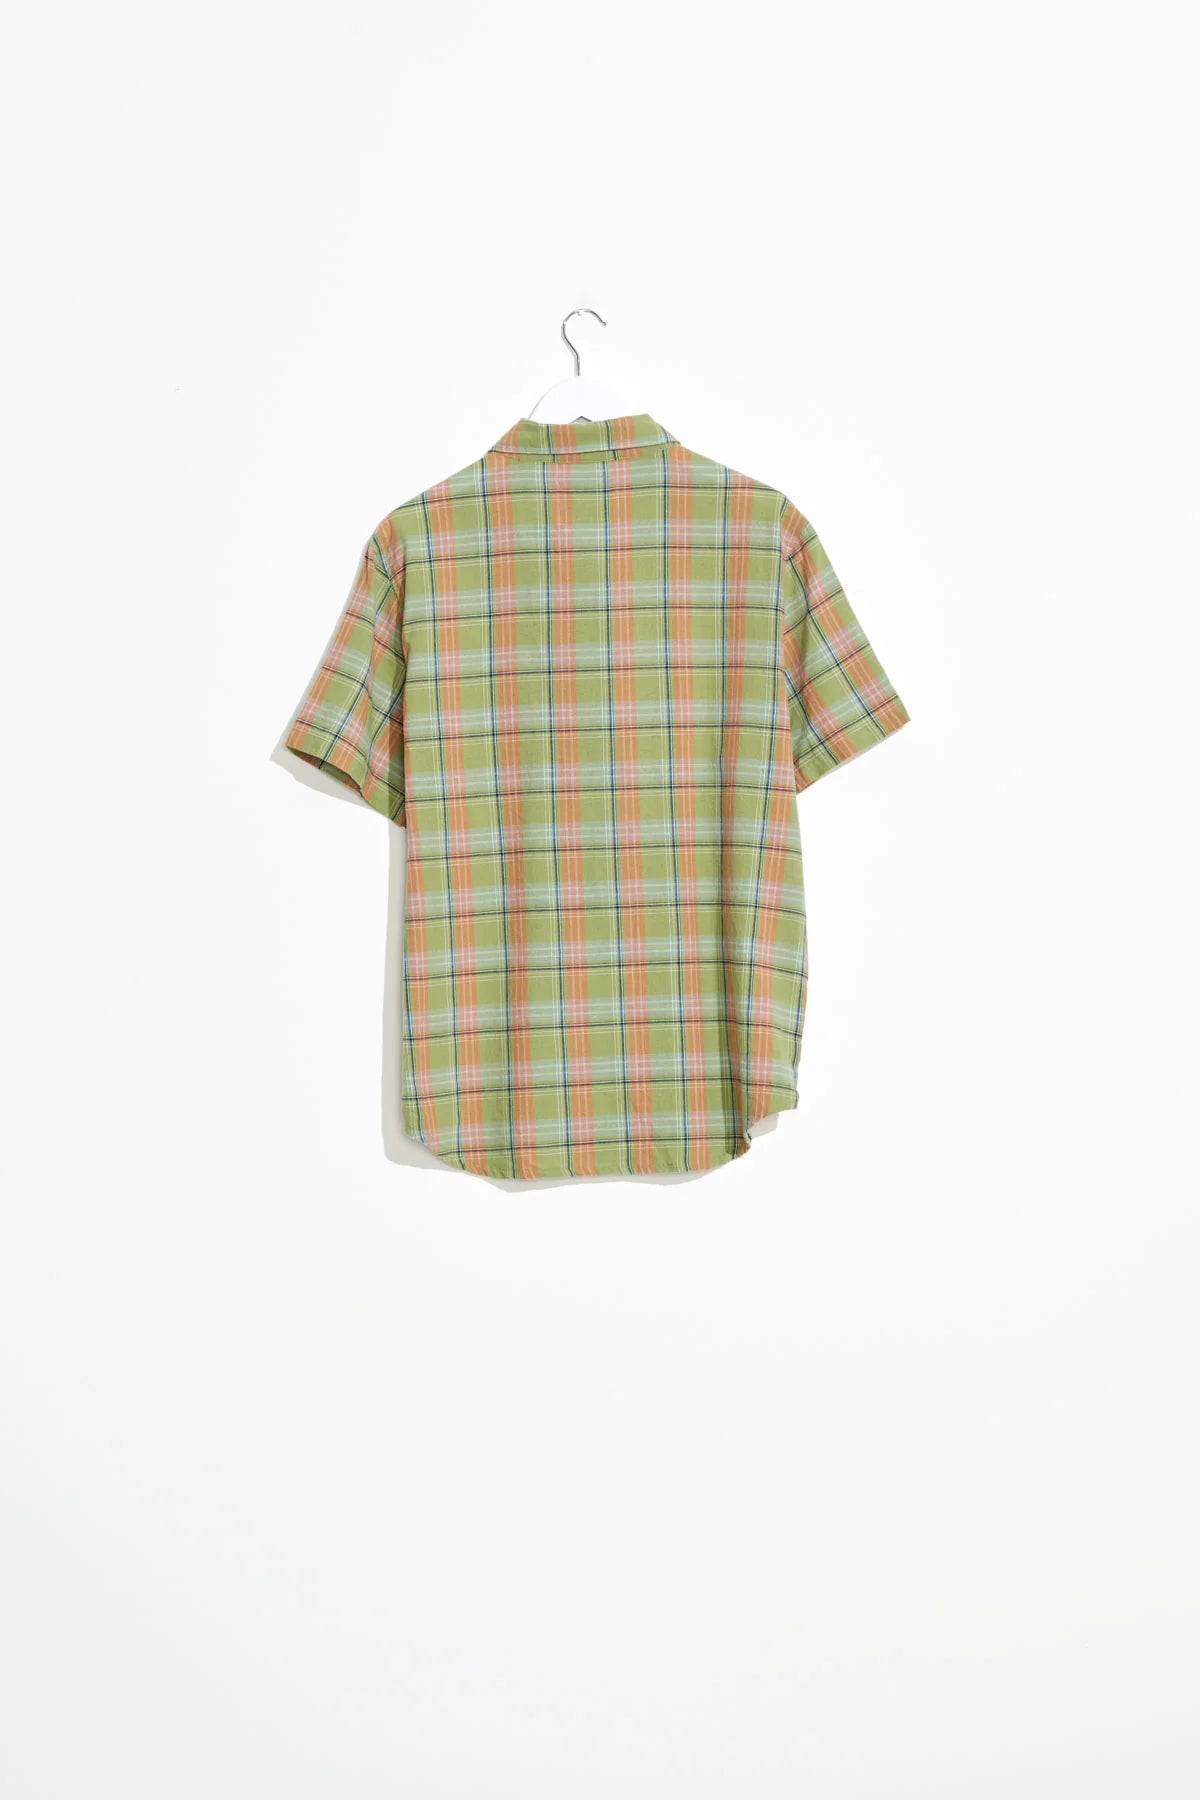 MISFIT // Darling Quartz SS Shirt GREEN